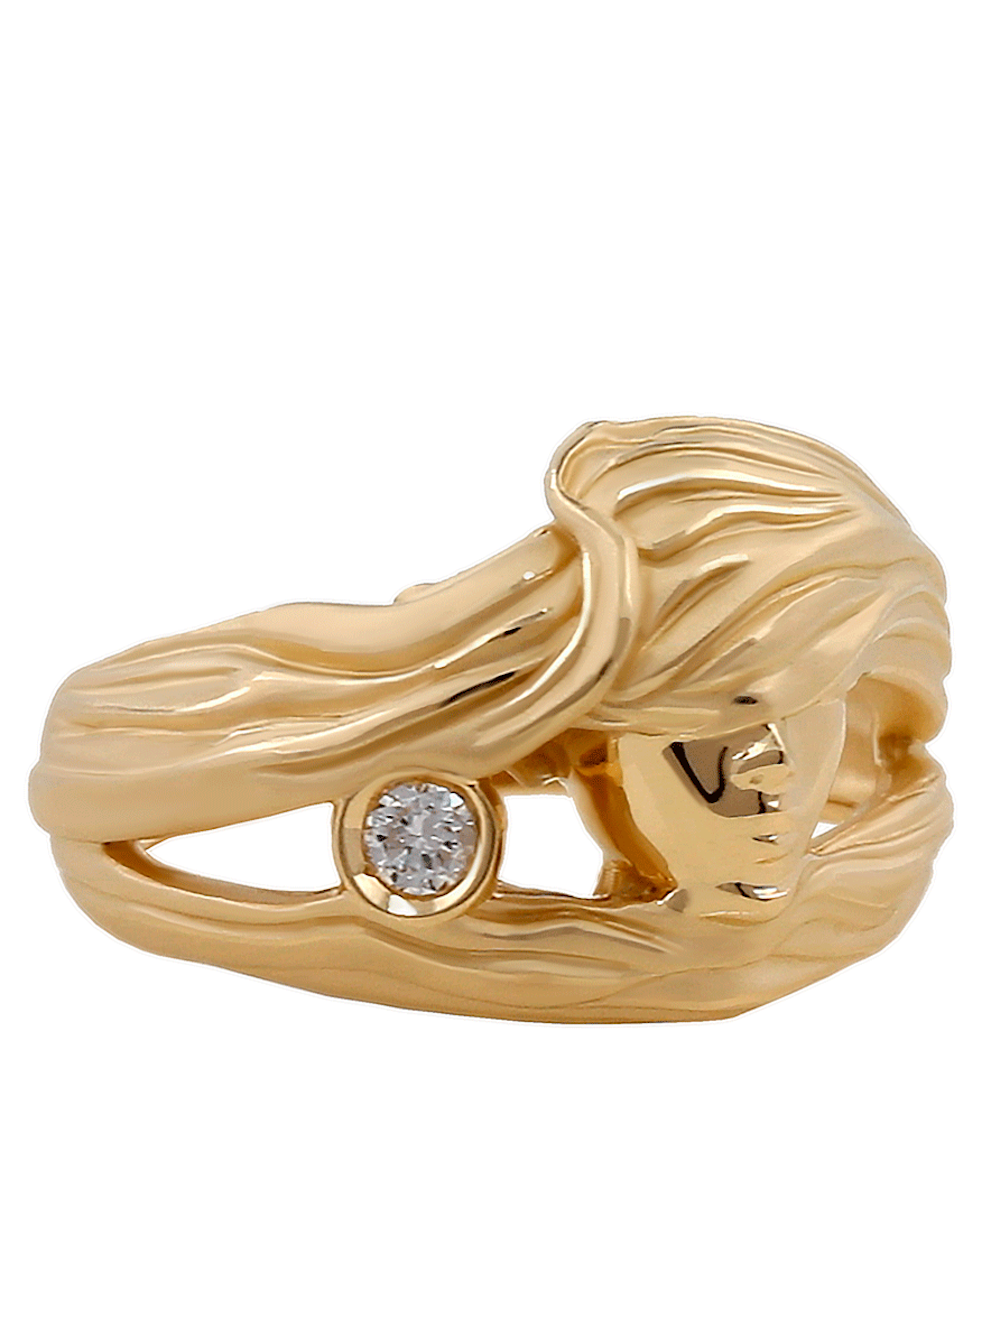 Gold Ring “ENIGMA” - Manuel Carrera Cordon